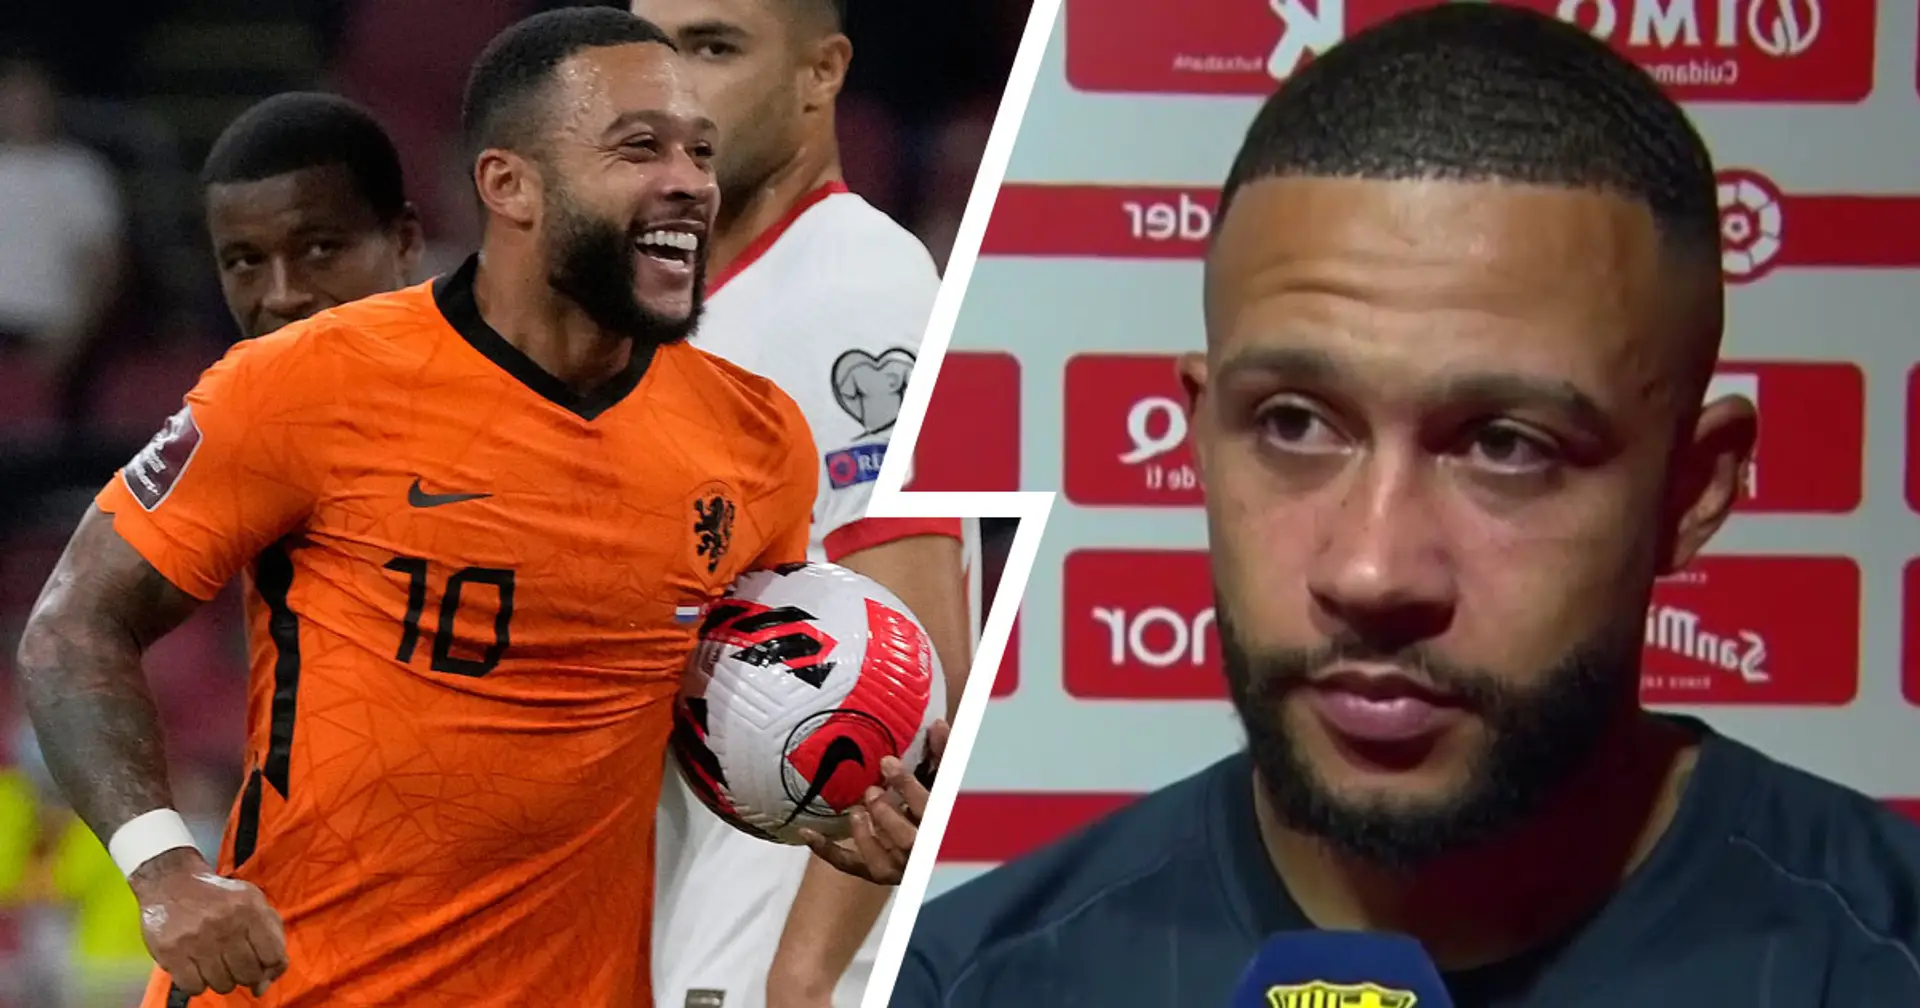 'I was sloppy': Memphis has surprising reaction to scoring hattrick in Netherlands win